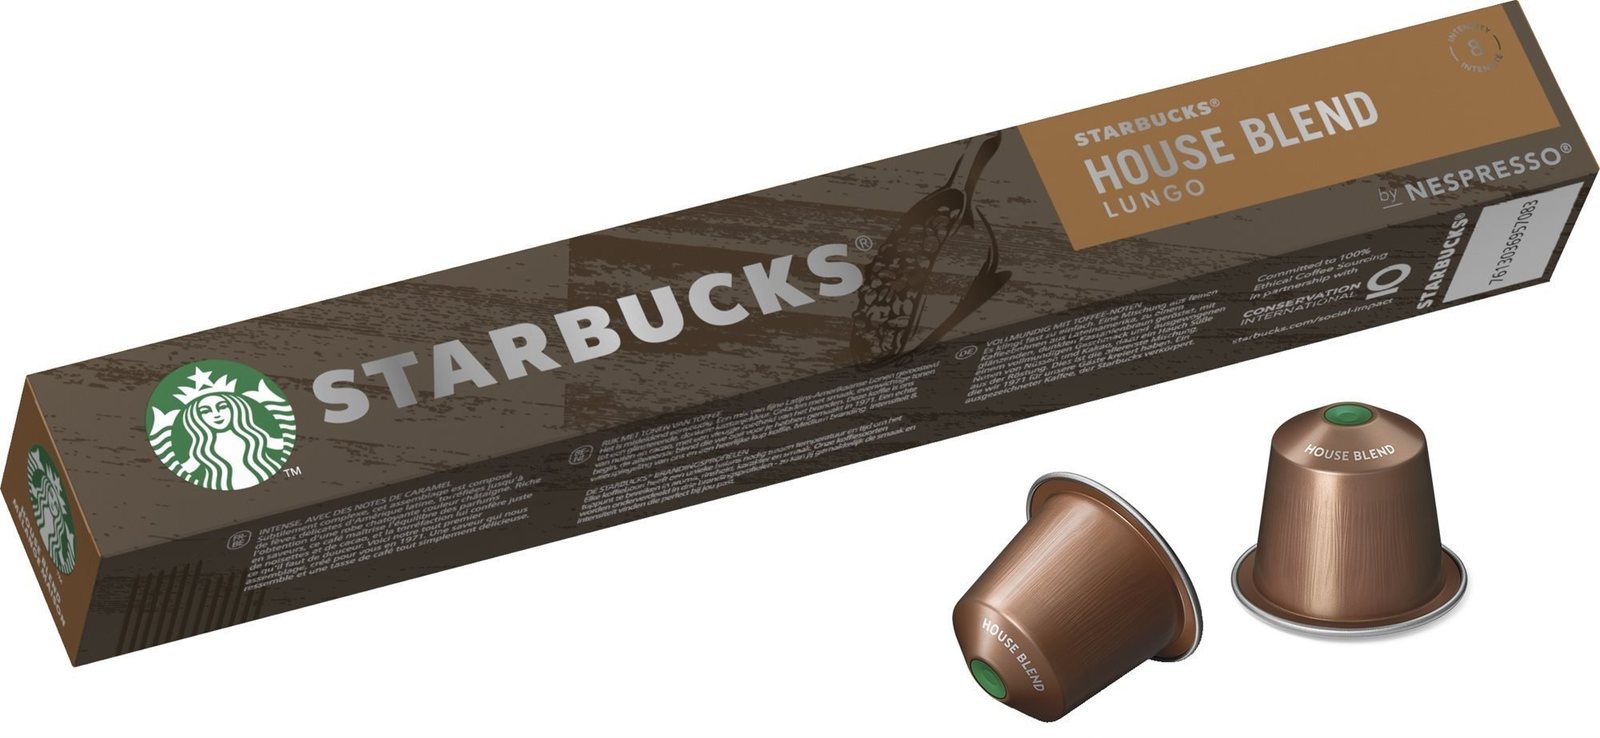 Starbucks by Nespresso House Blend 2 x 10 pcs coffee capsules - $19.95